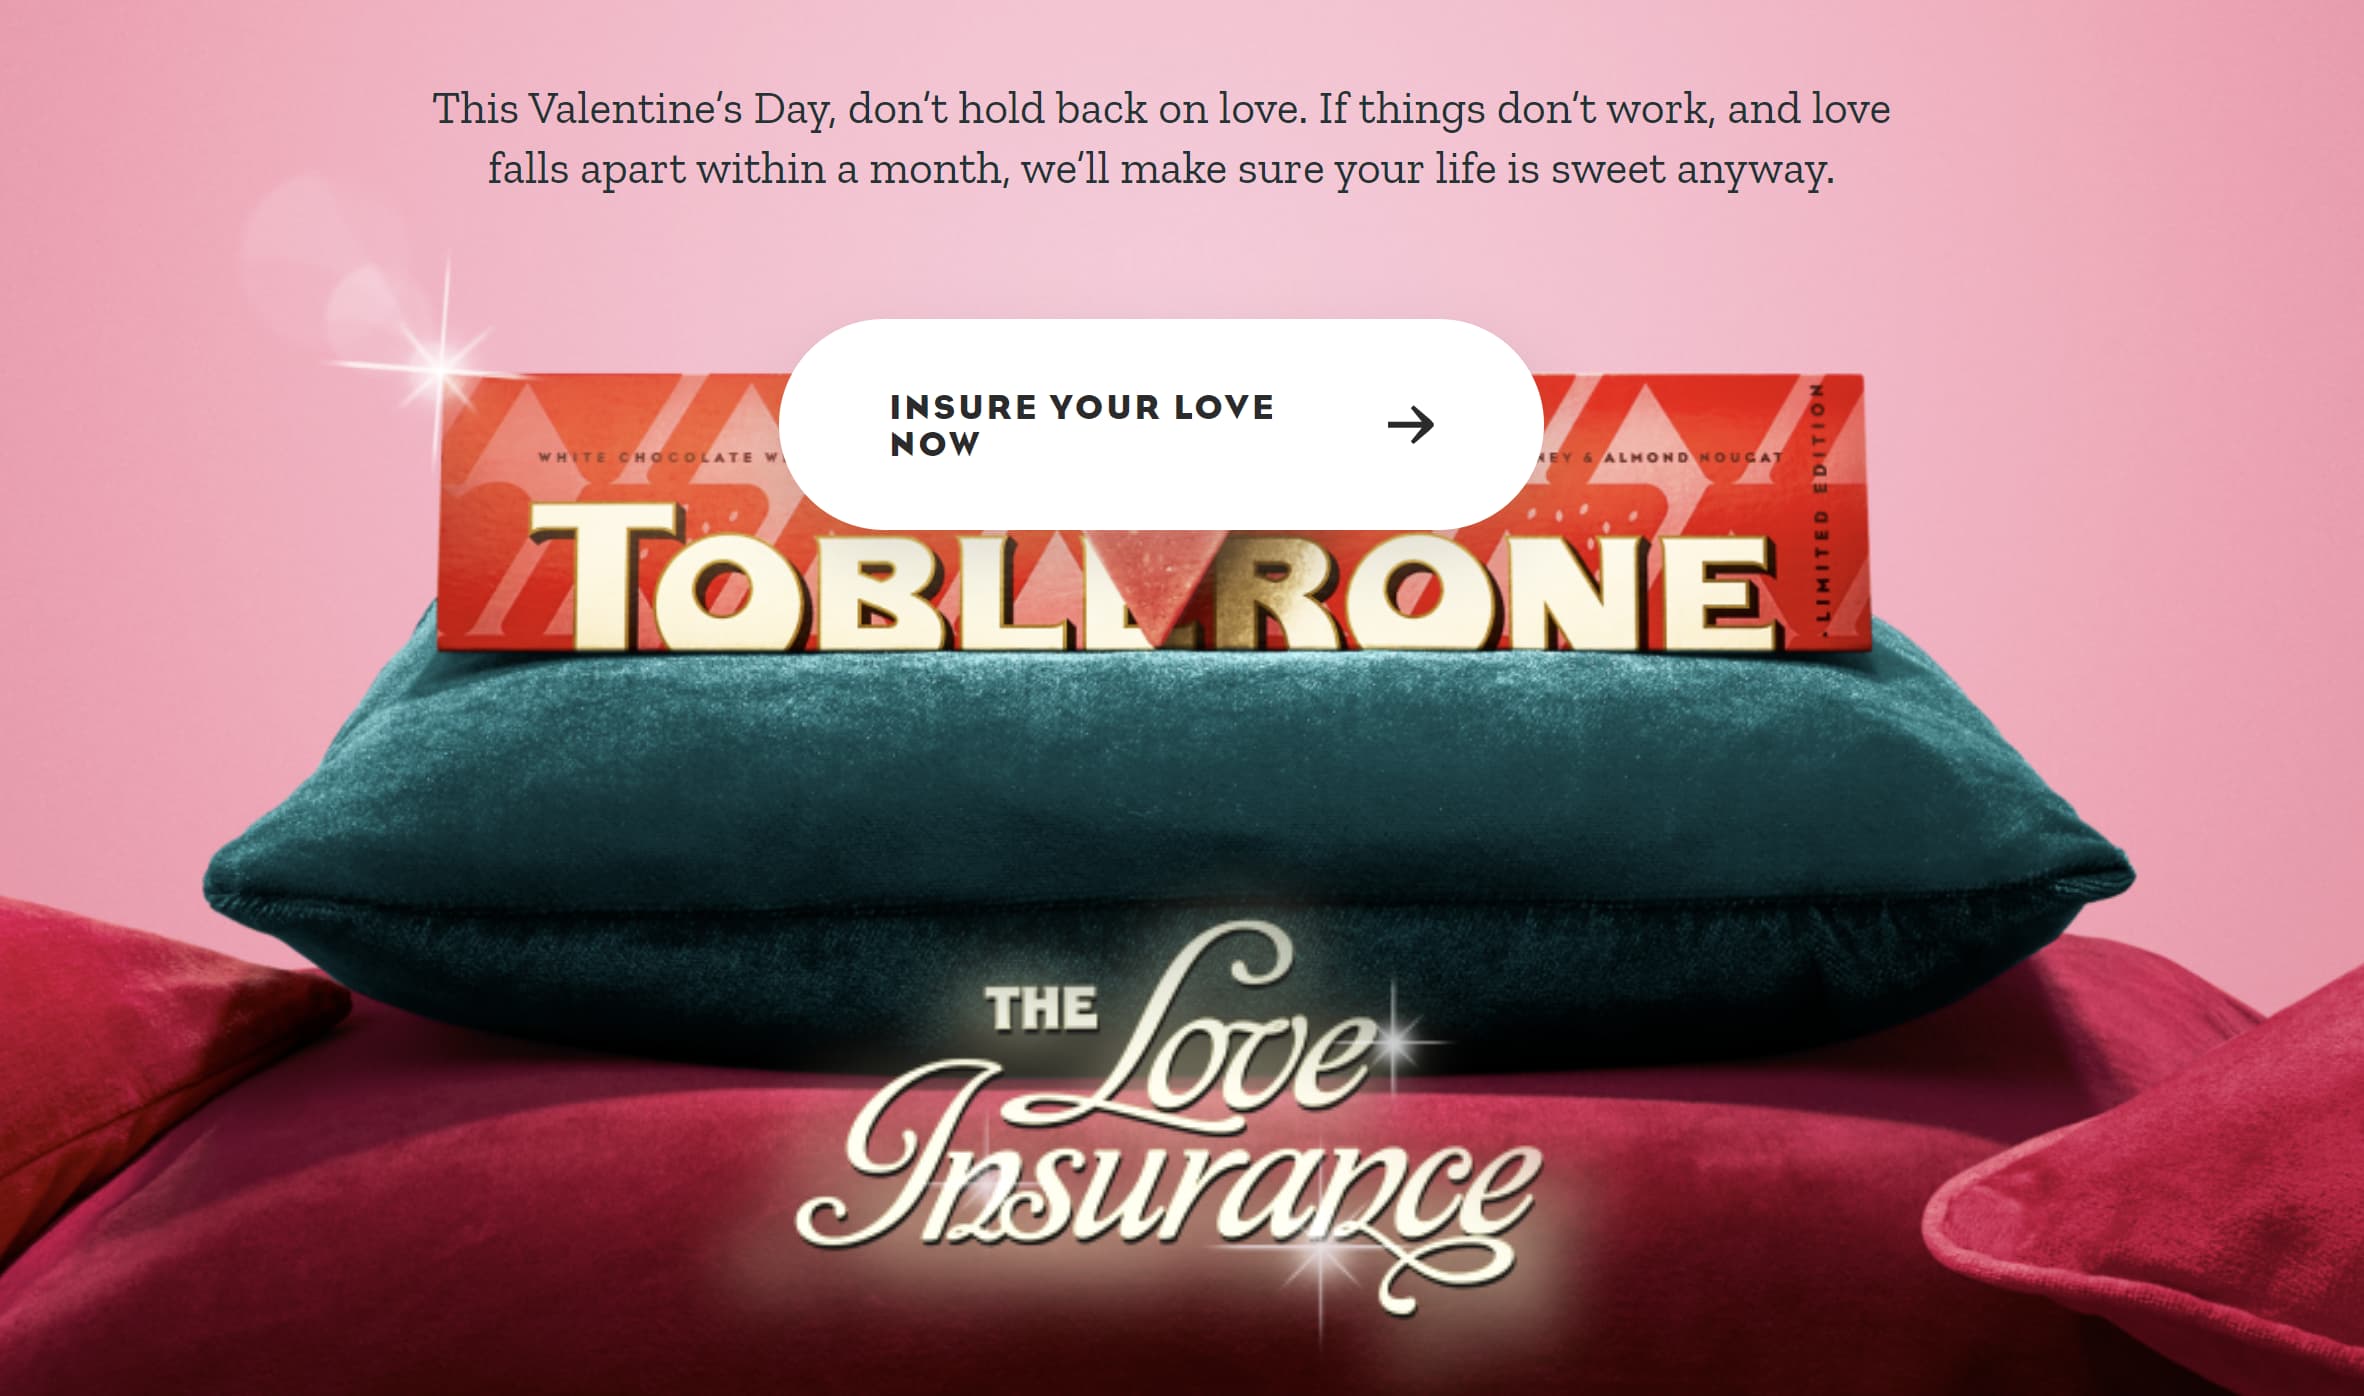 toblerone%20the%20love%20insurance.jpg?width=2364&height=1396&name=toblerone%20the%20love%20insurance - 20 Valentine&#039;s Day Marketing Campaigns We Love